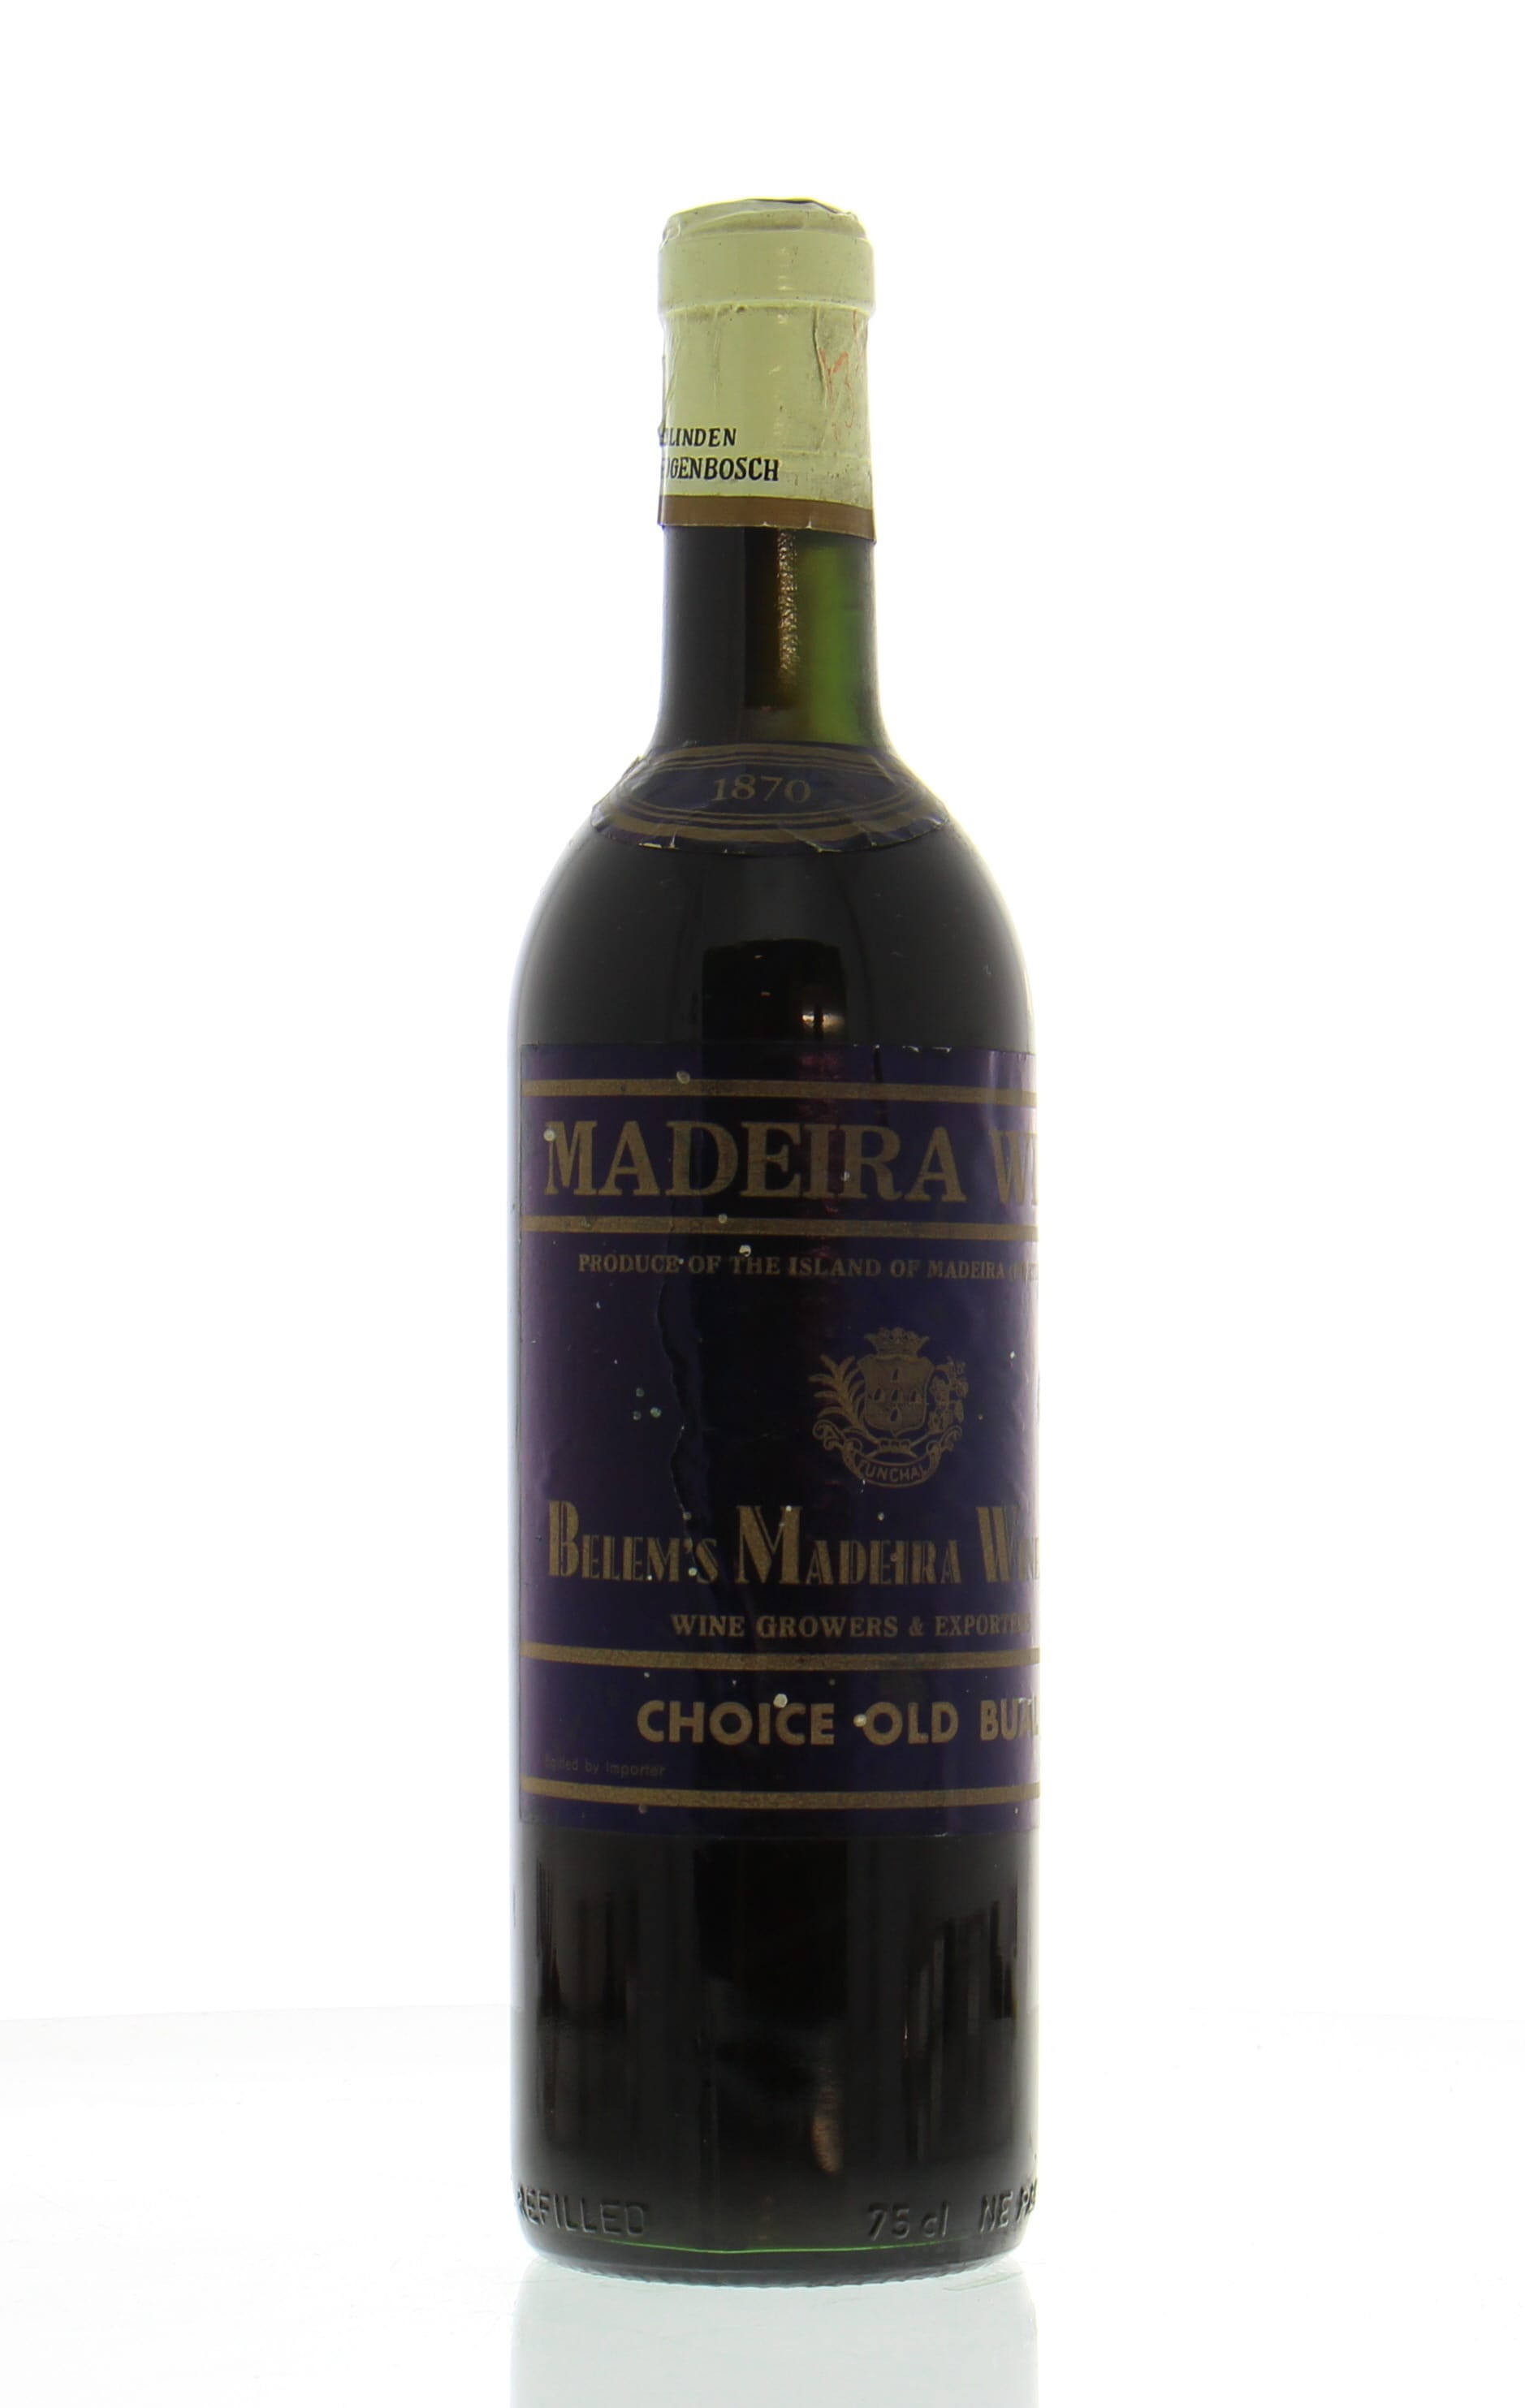 Belem - Madeira choice old Bual 1870 Top shoulder